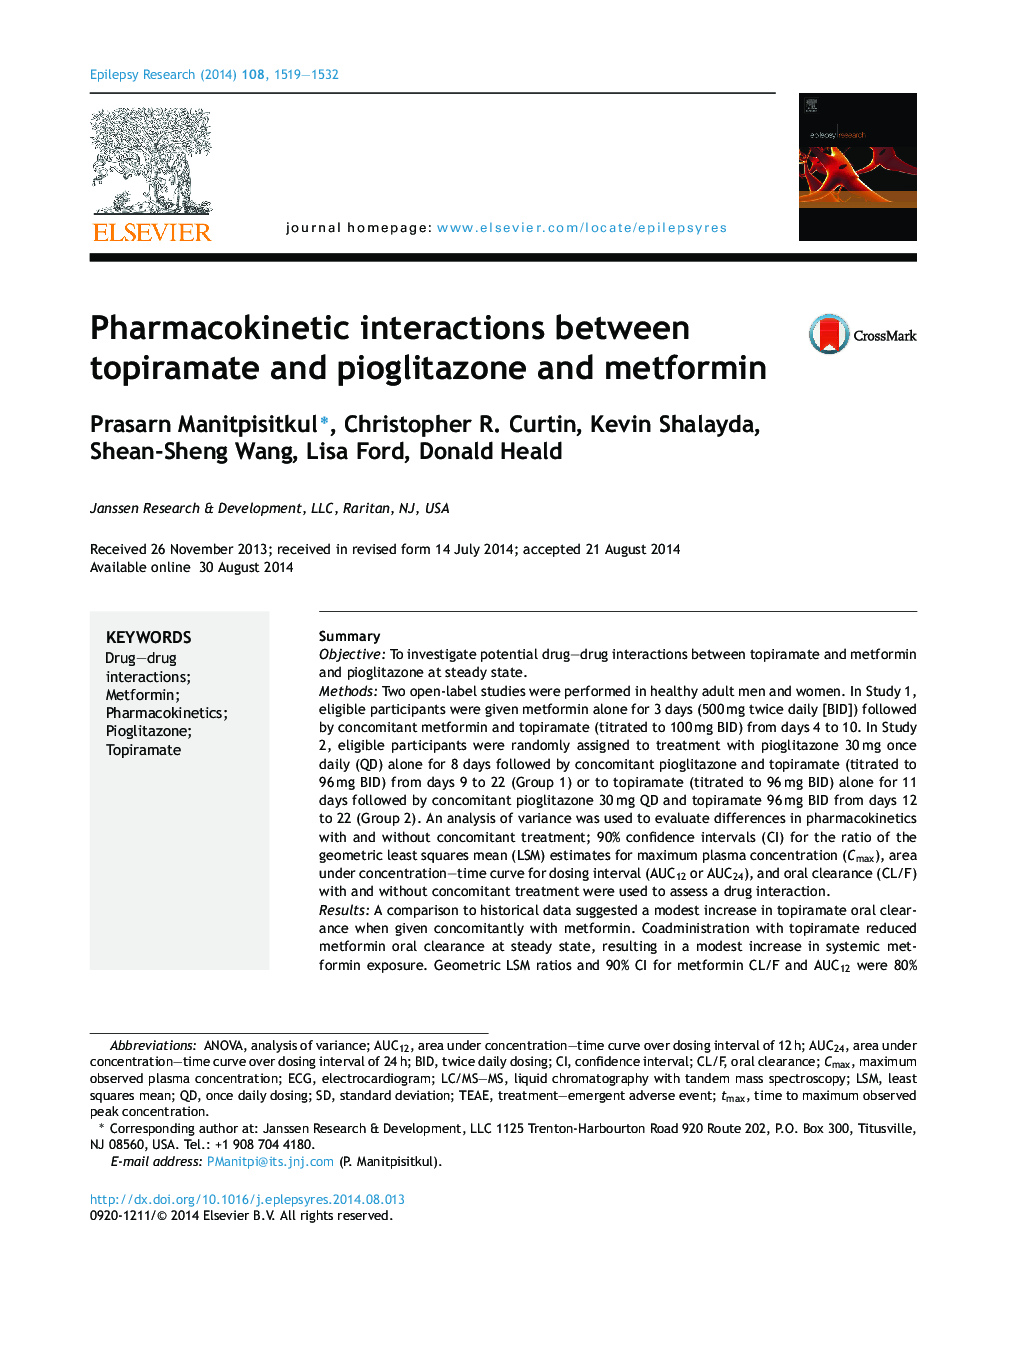 Pharmacokinetic interactions between topiramate and pioglitazone and metformin